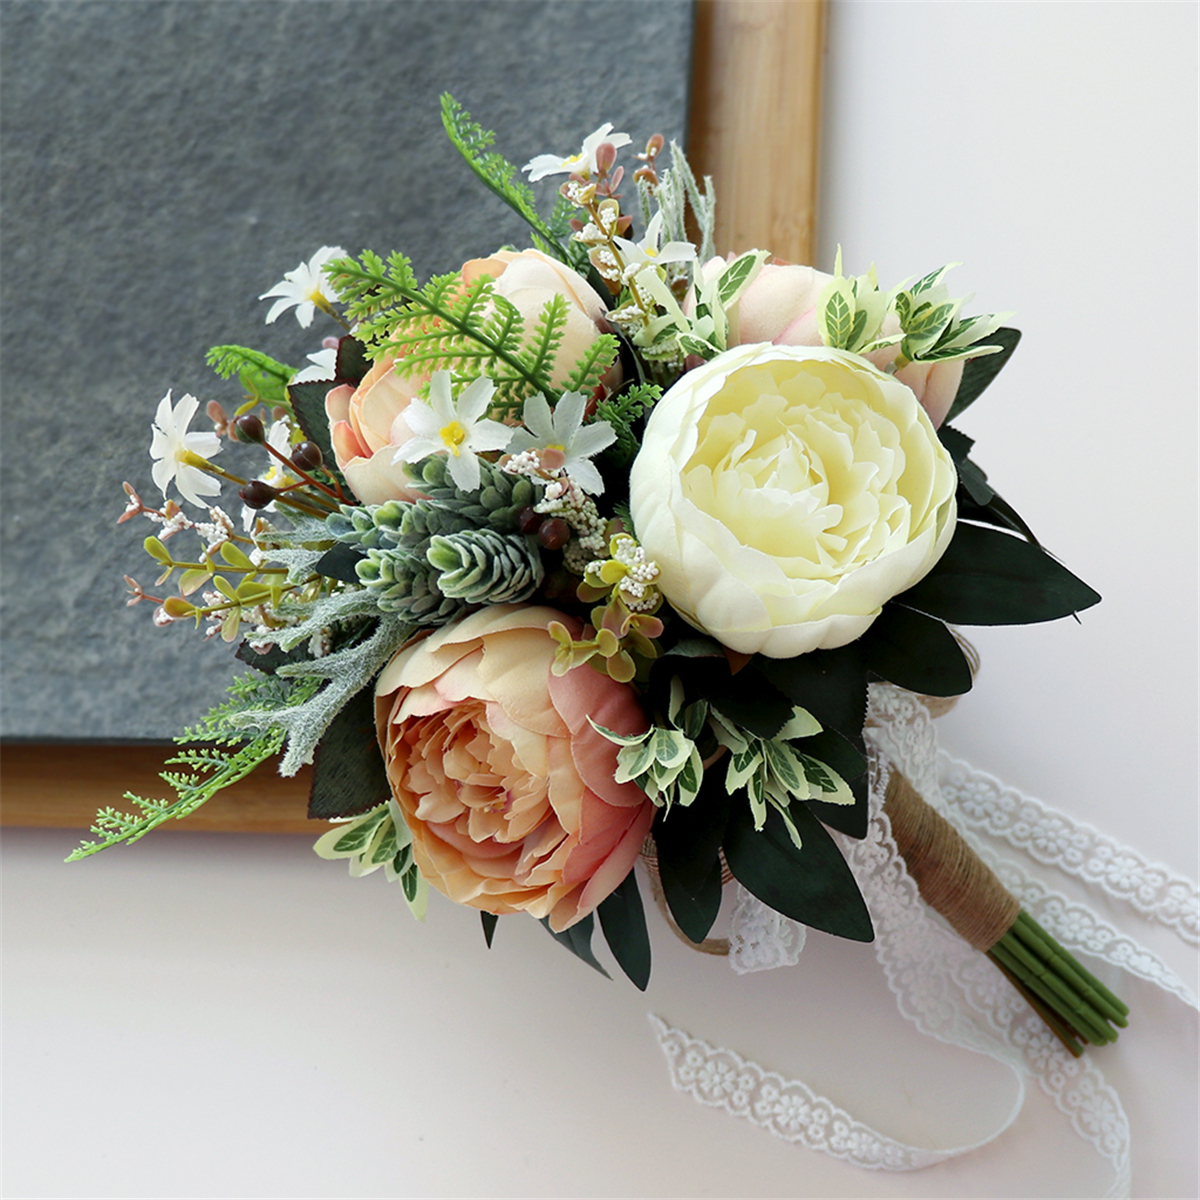 Wedding-Bridal-Bouquets-Handmade-Artificial-Flowers-Decorations-Bride-Accessories-1643090-10